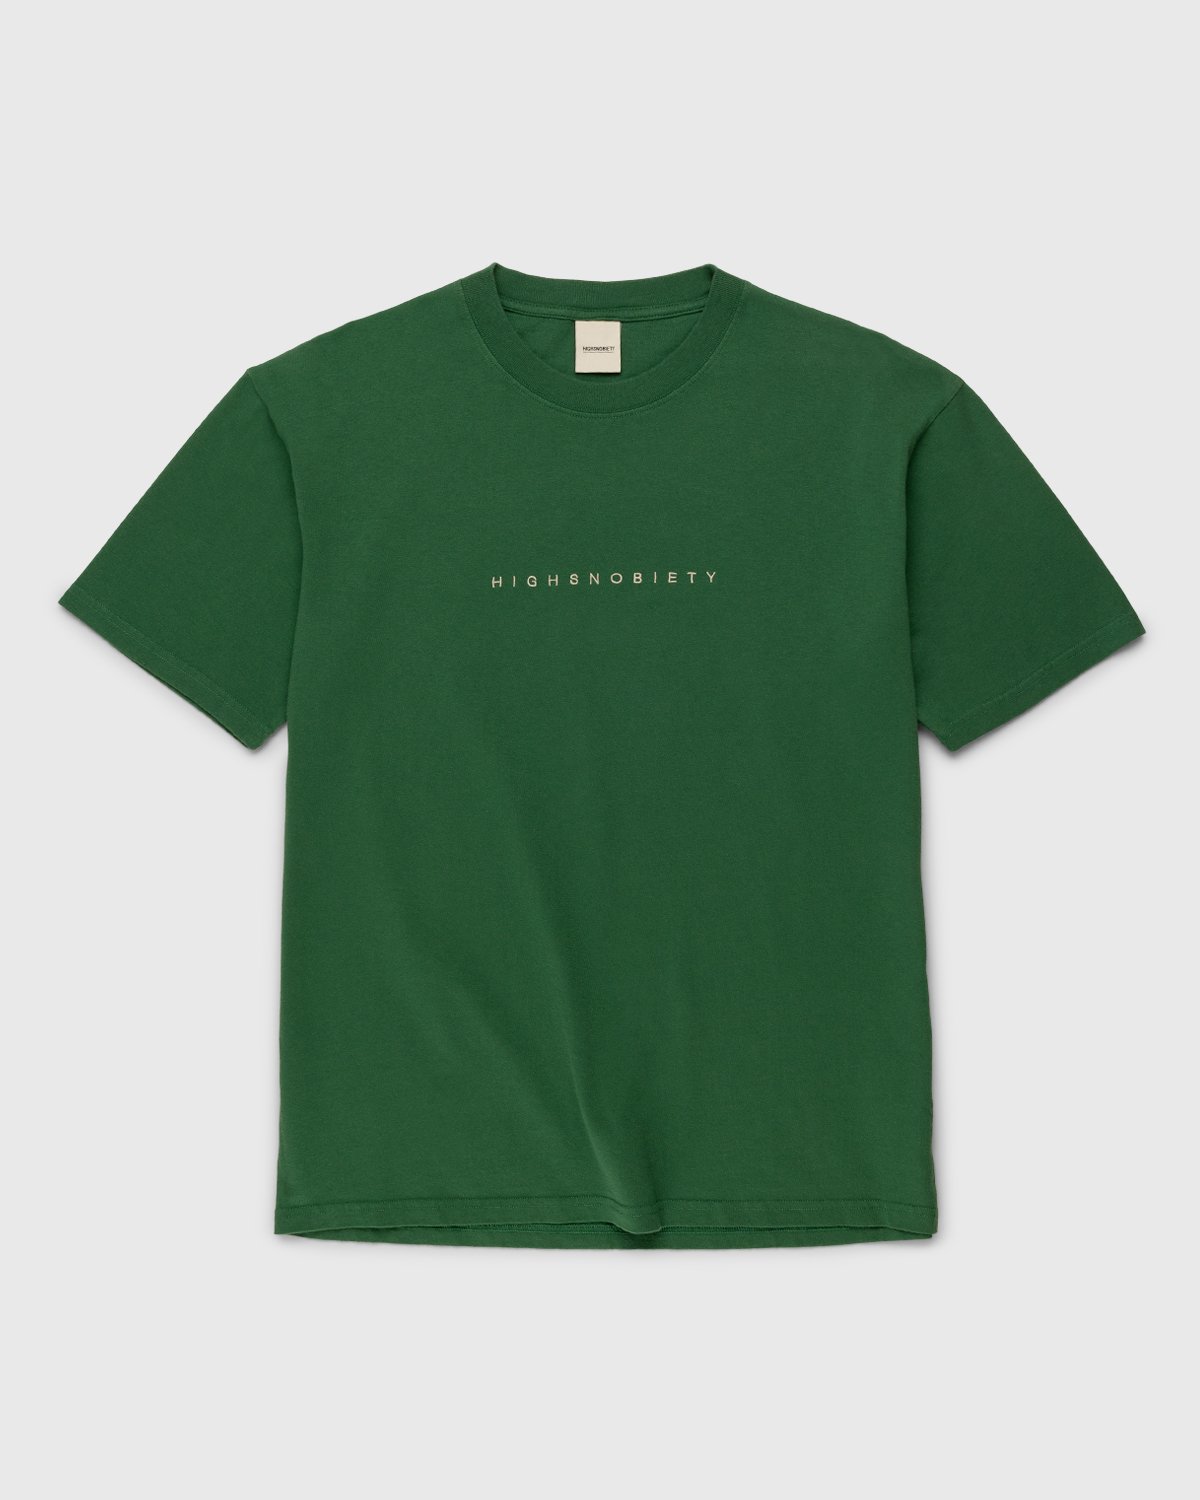 Highsnobiety - Staples T-Shirt Lush Green - Clothing - Green - Image 1